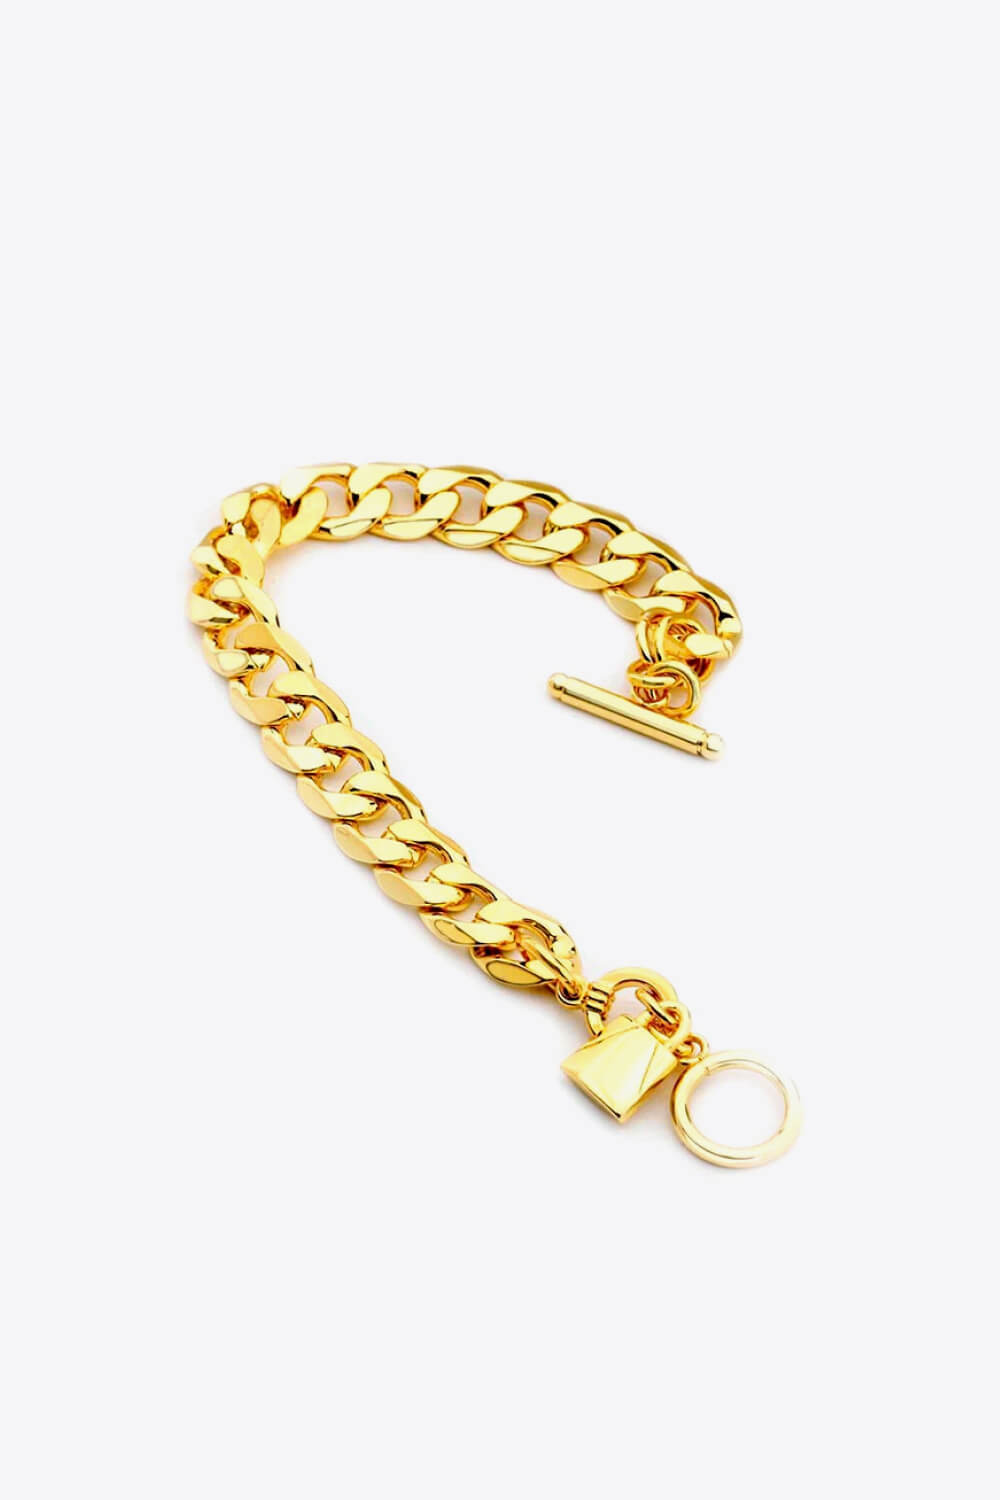 Lock Charm Toggle Clasp Bracelet - Gold / One Size - Women’s Jewelry - Bracelets - 3 - 2024